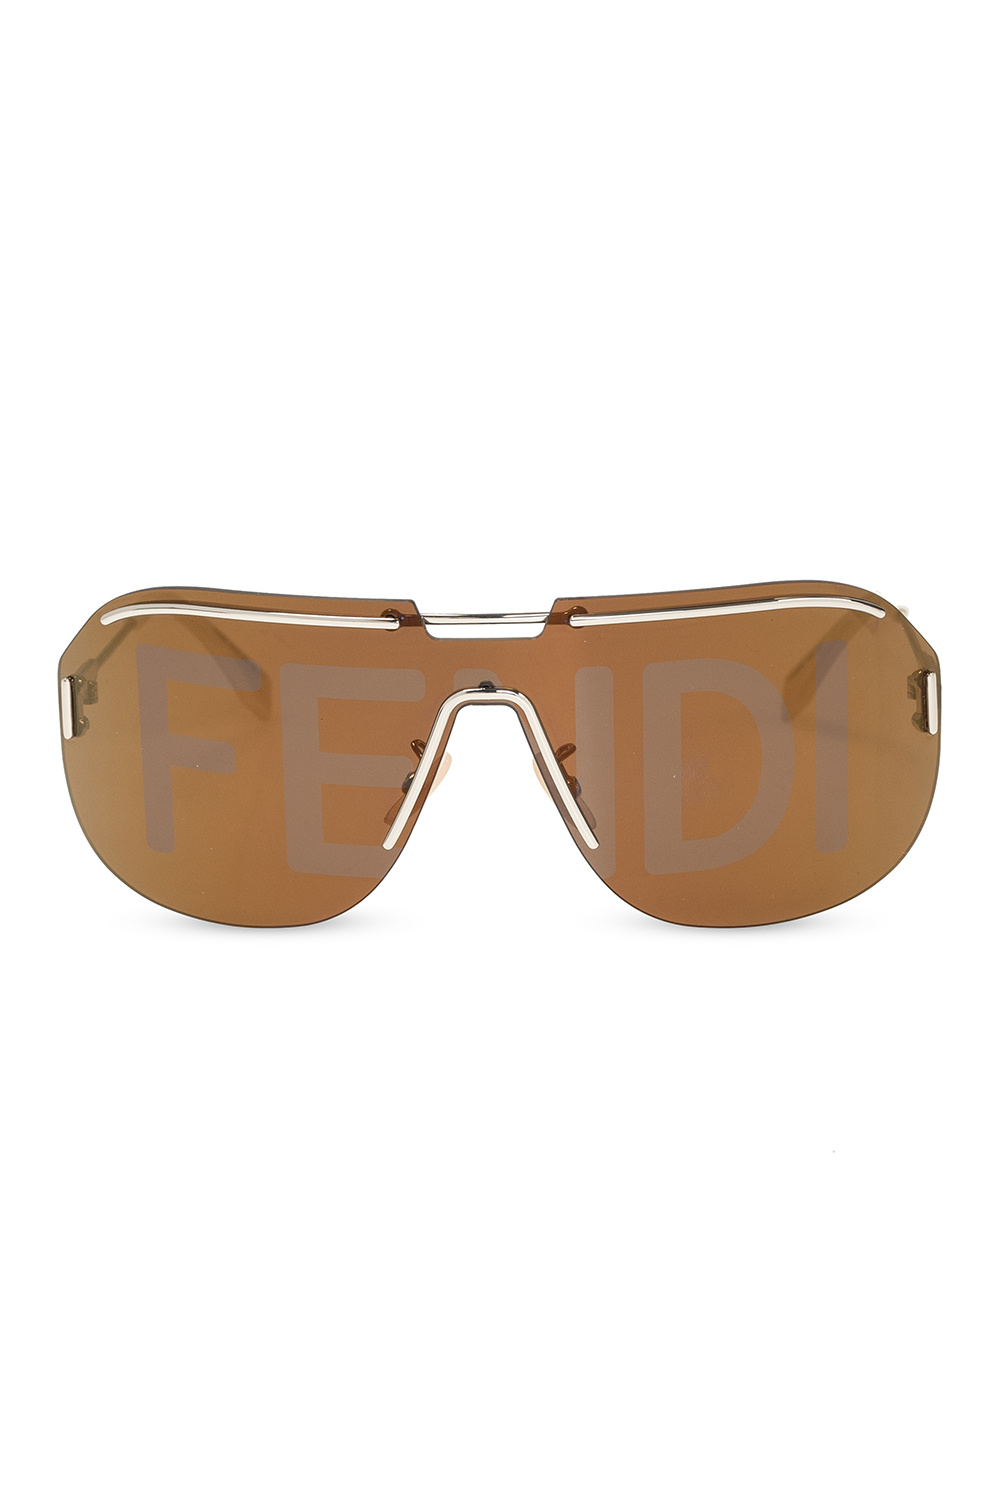 Fendi sunglasses darkgrey with logo